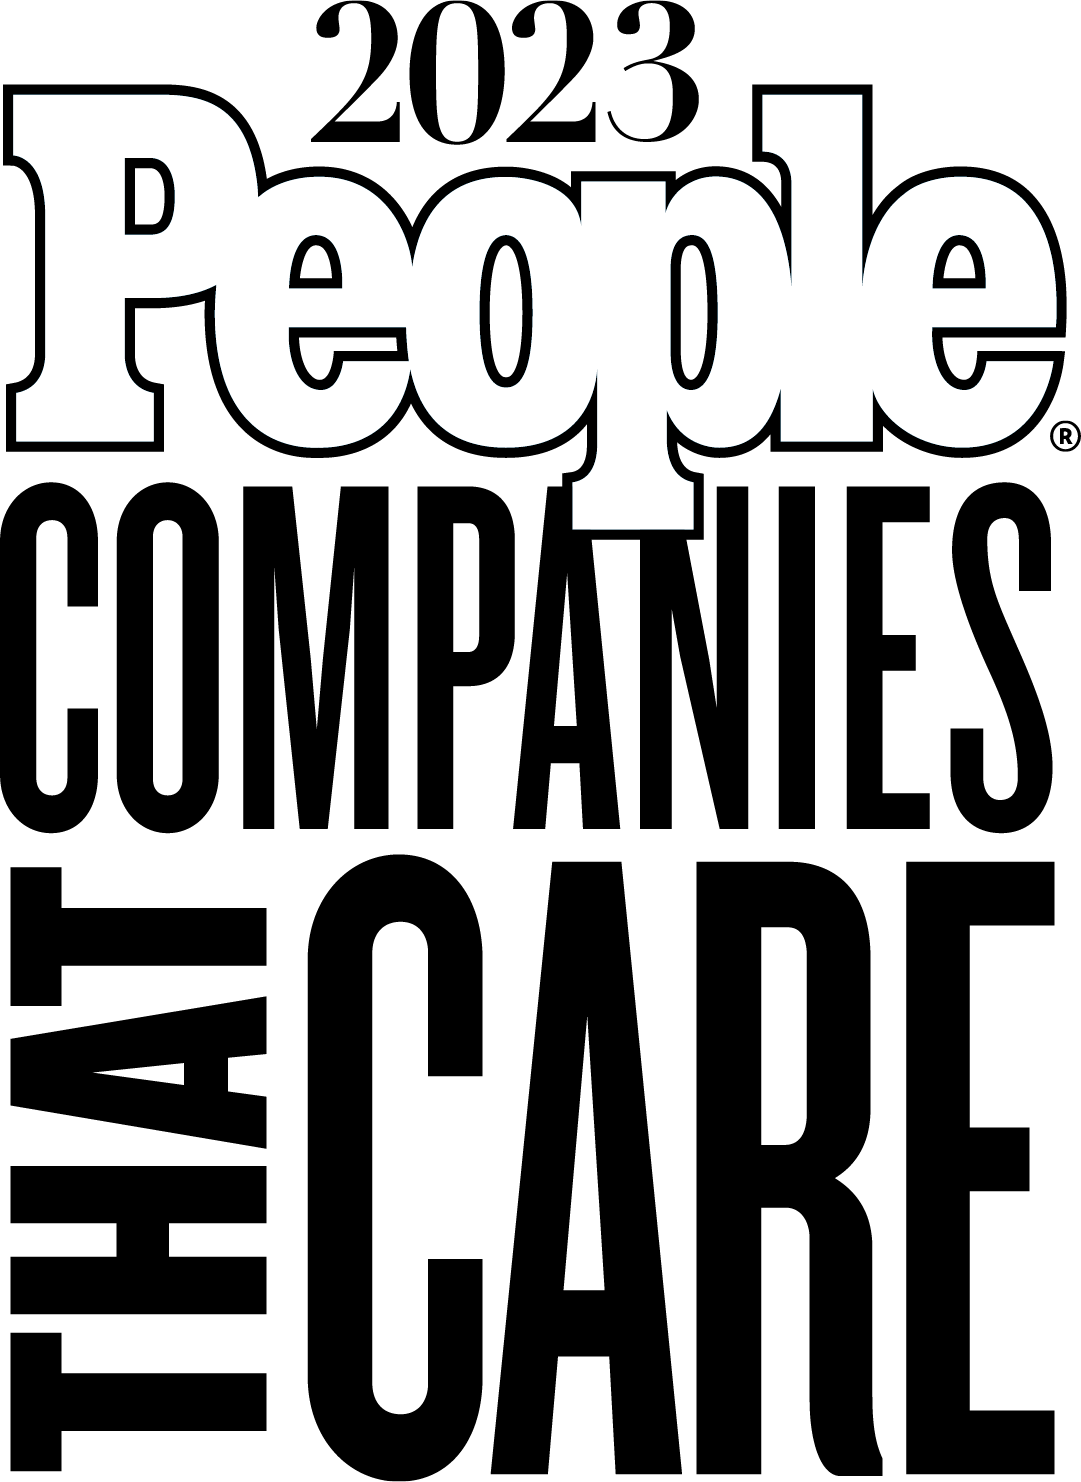 People Magazine’s 2023 Companies that Care award logo